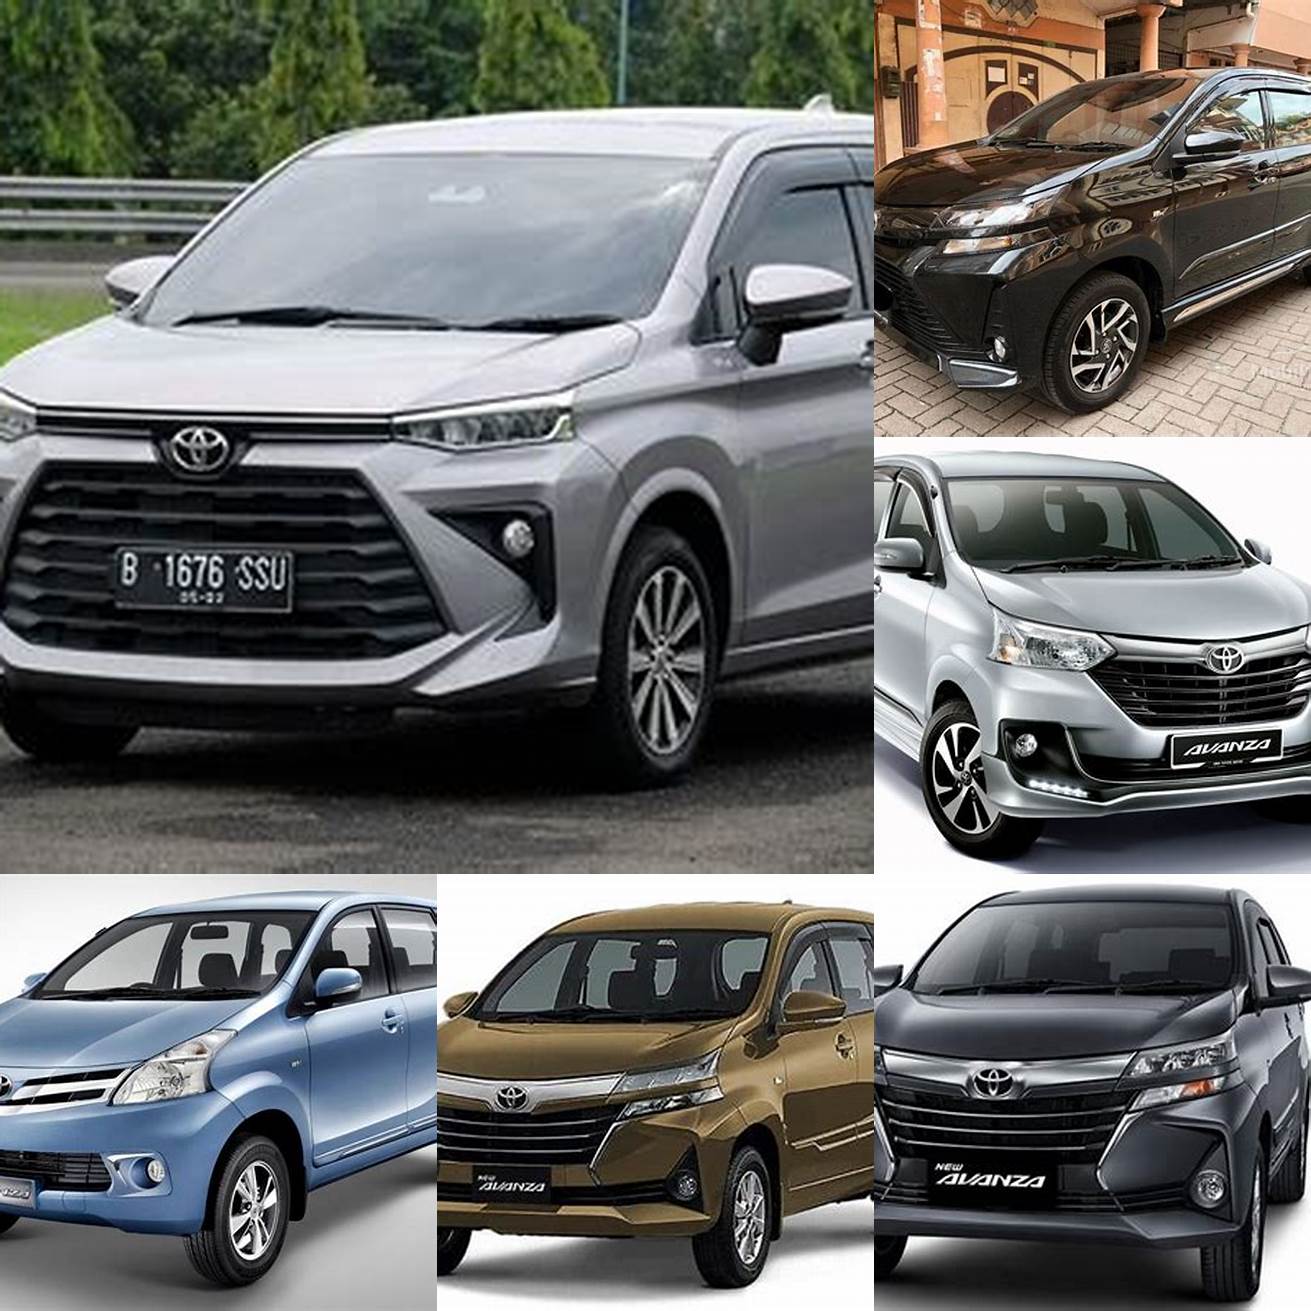 Harga mobil Toyota Avanza di Surabaya Rp 160 juta - Rp 220 juta